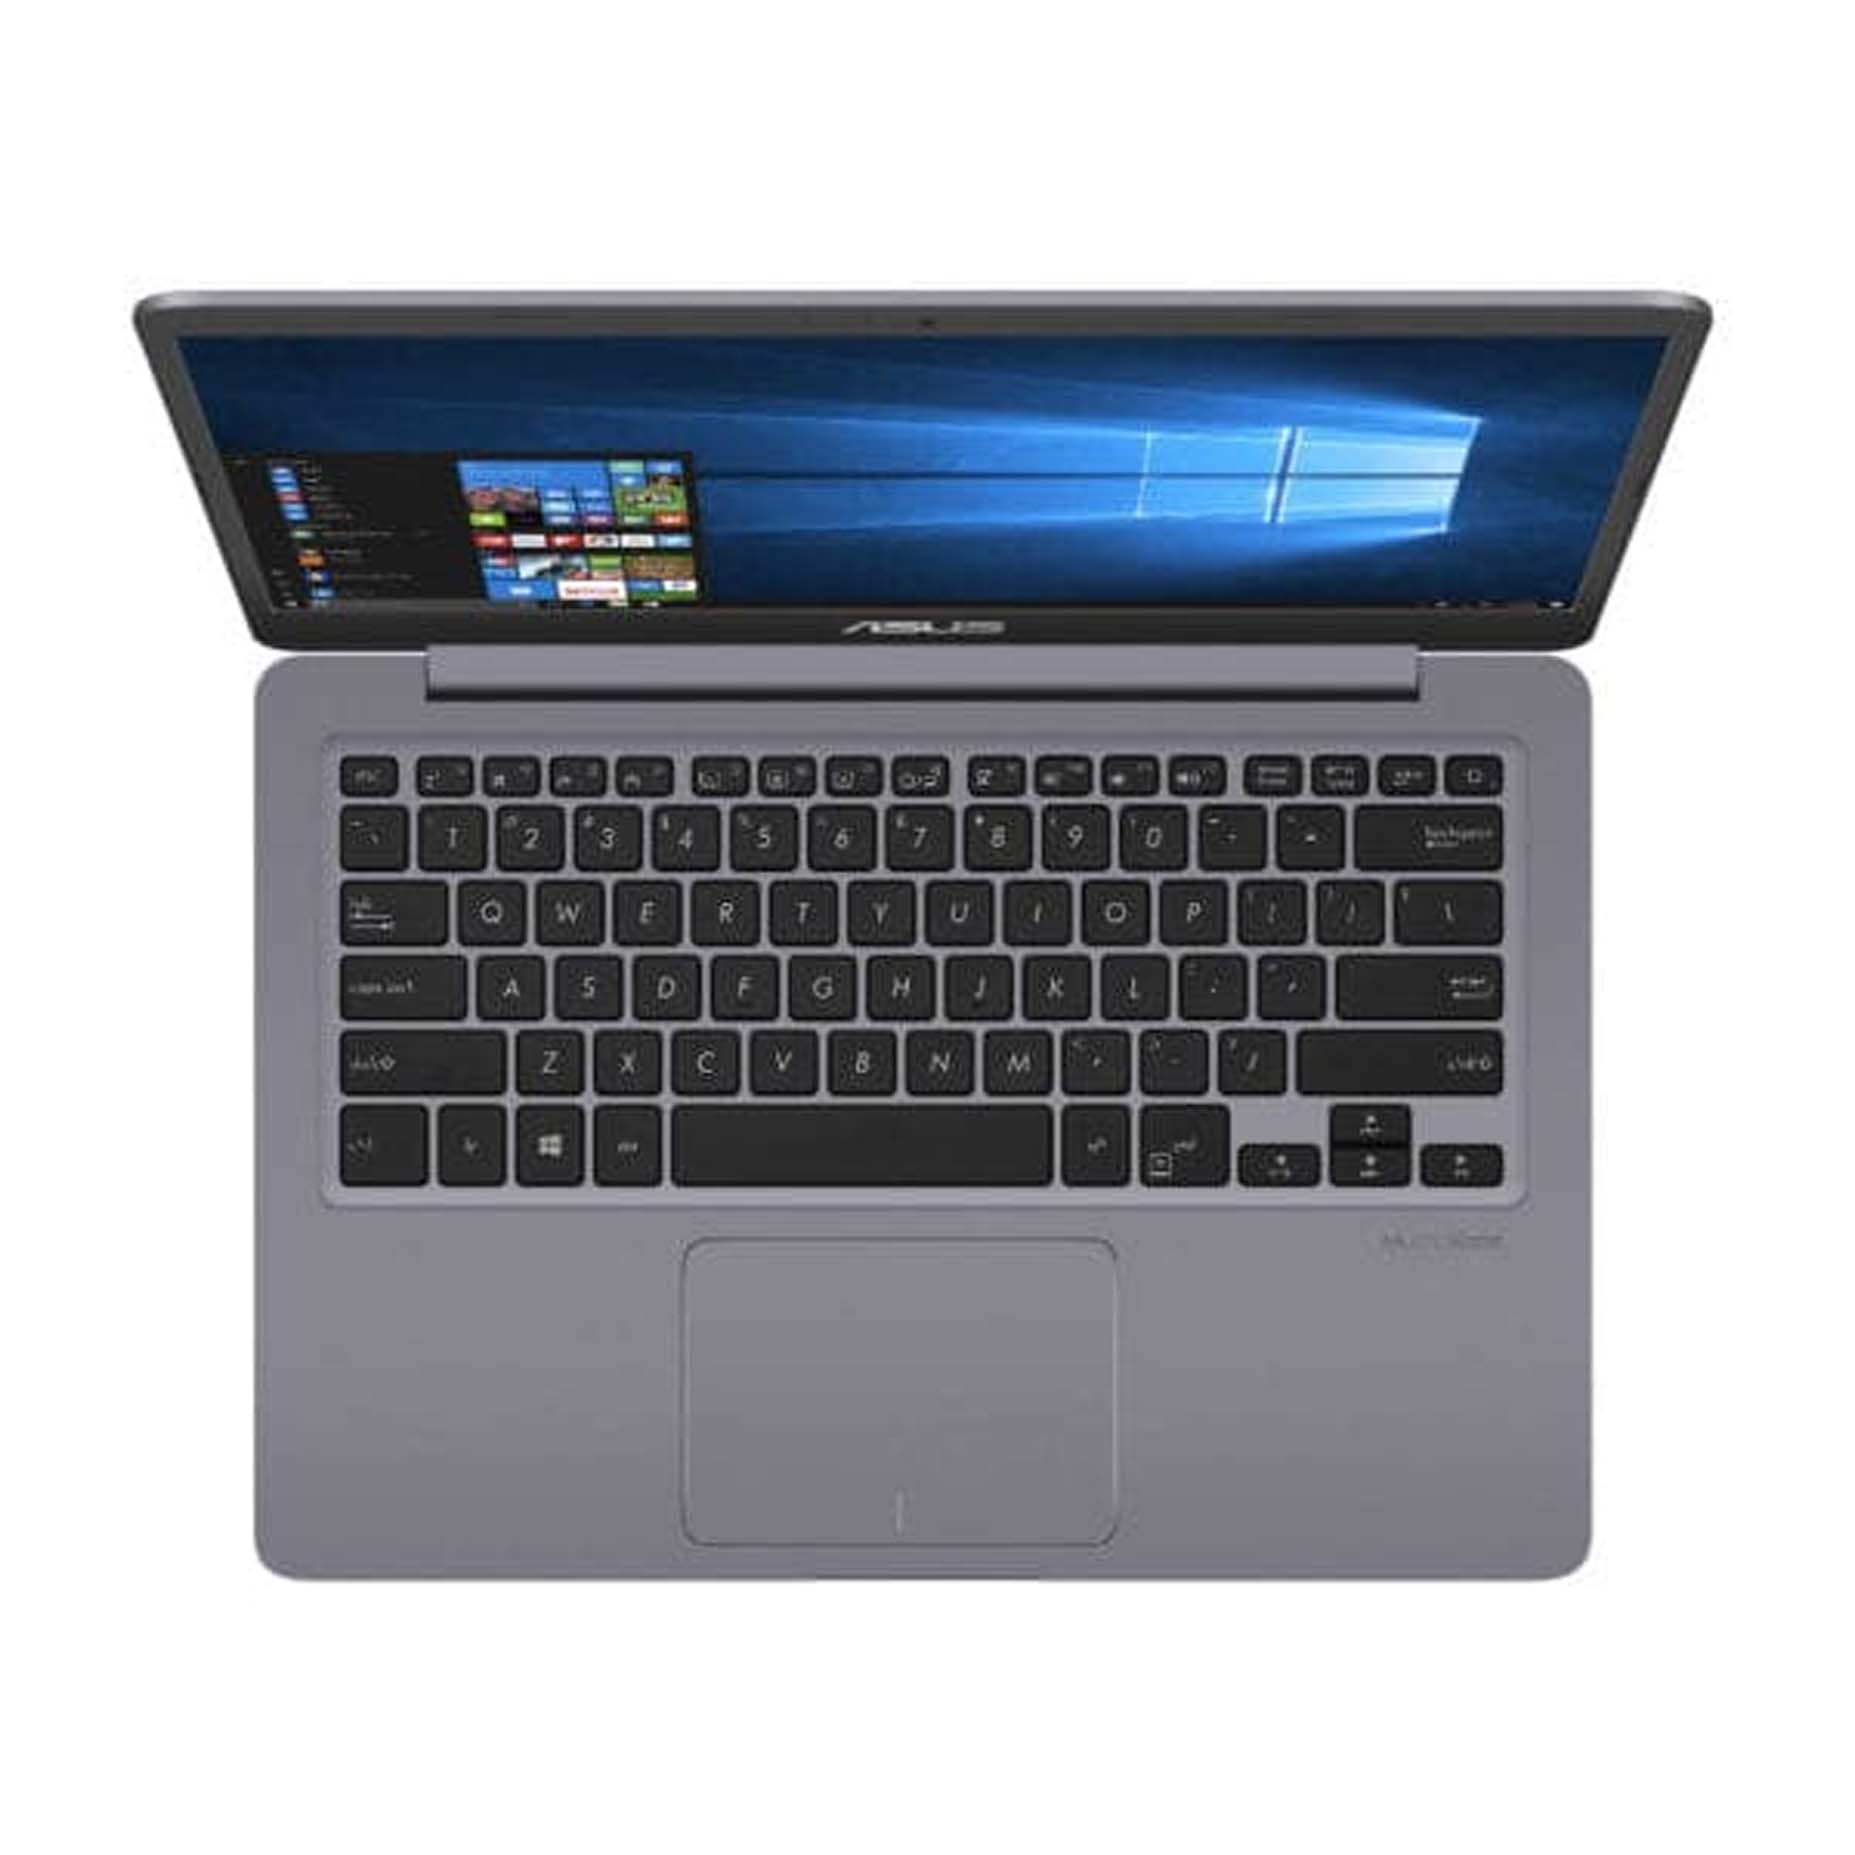 Harga Asus VivoBook S14 S410UN-EB068T Laptop i5-8250U 8GB 128GB 14.0-inch Win 10